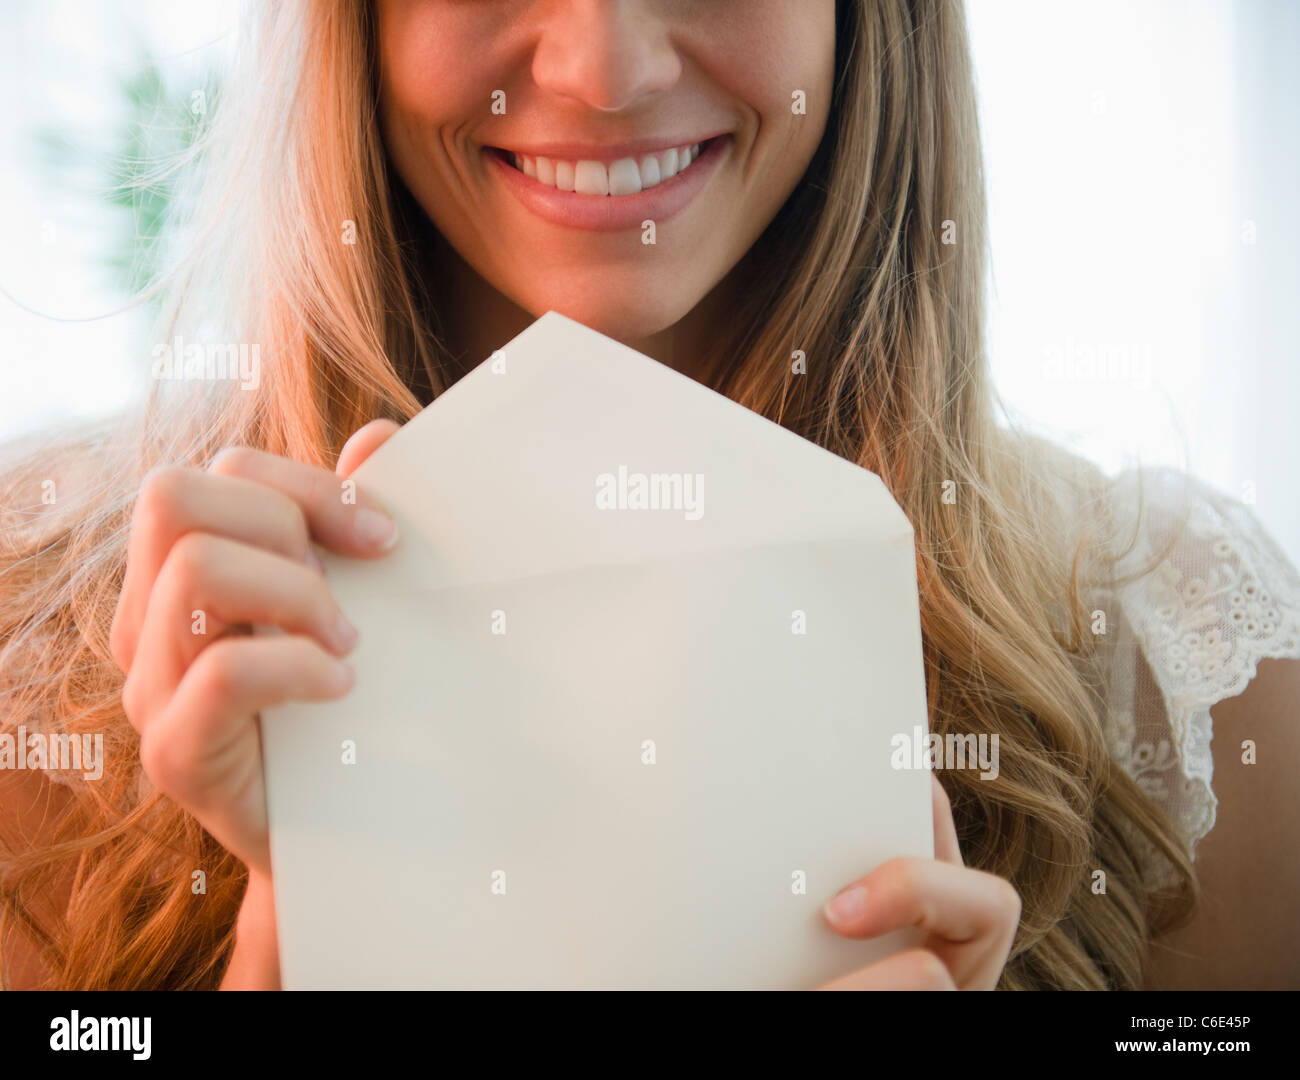 USA, New Jersey, Jersey City, Portrait of blonde woman holding envelope Stock Photo